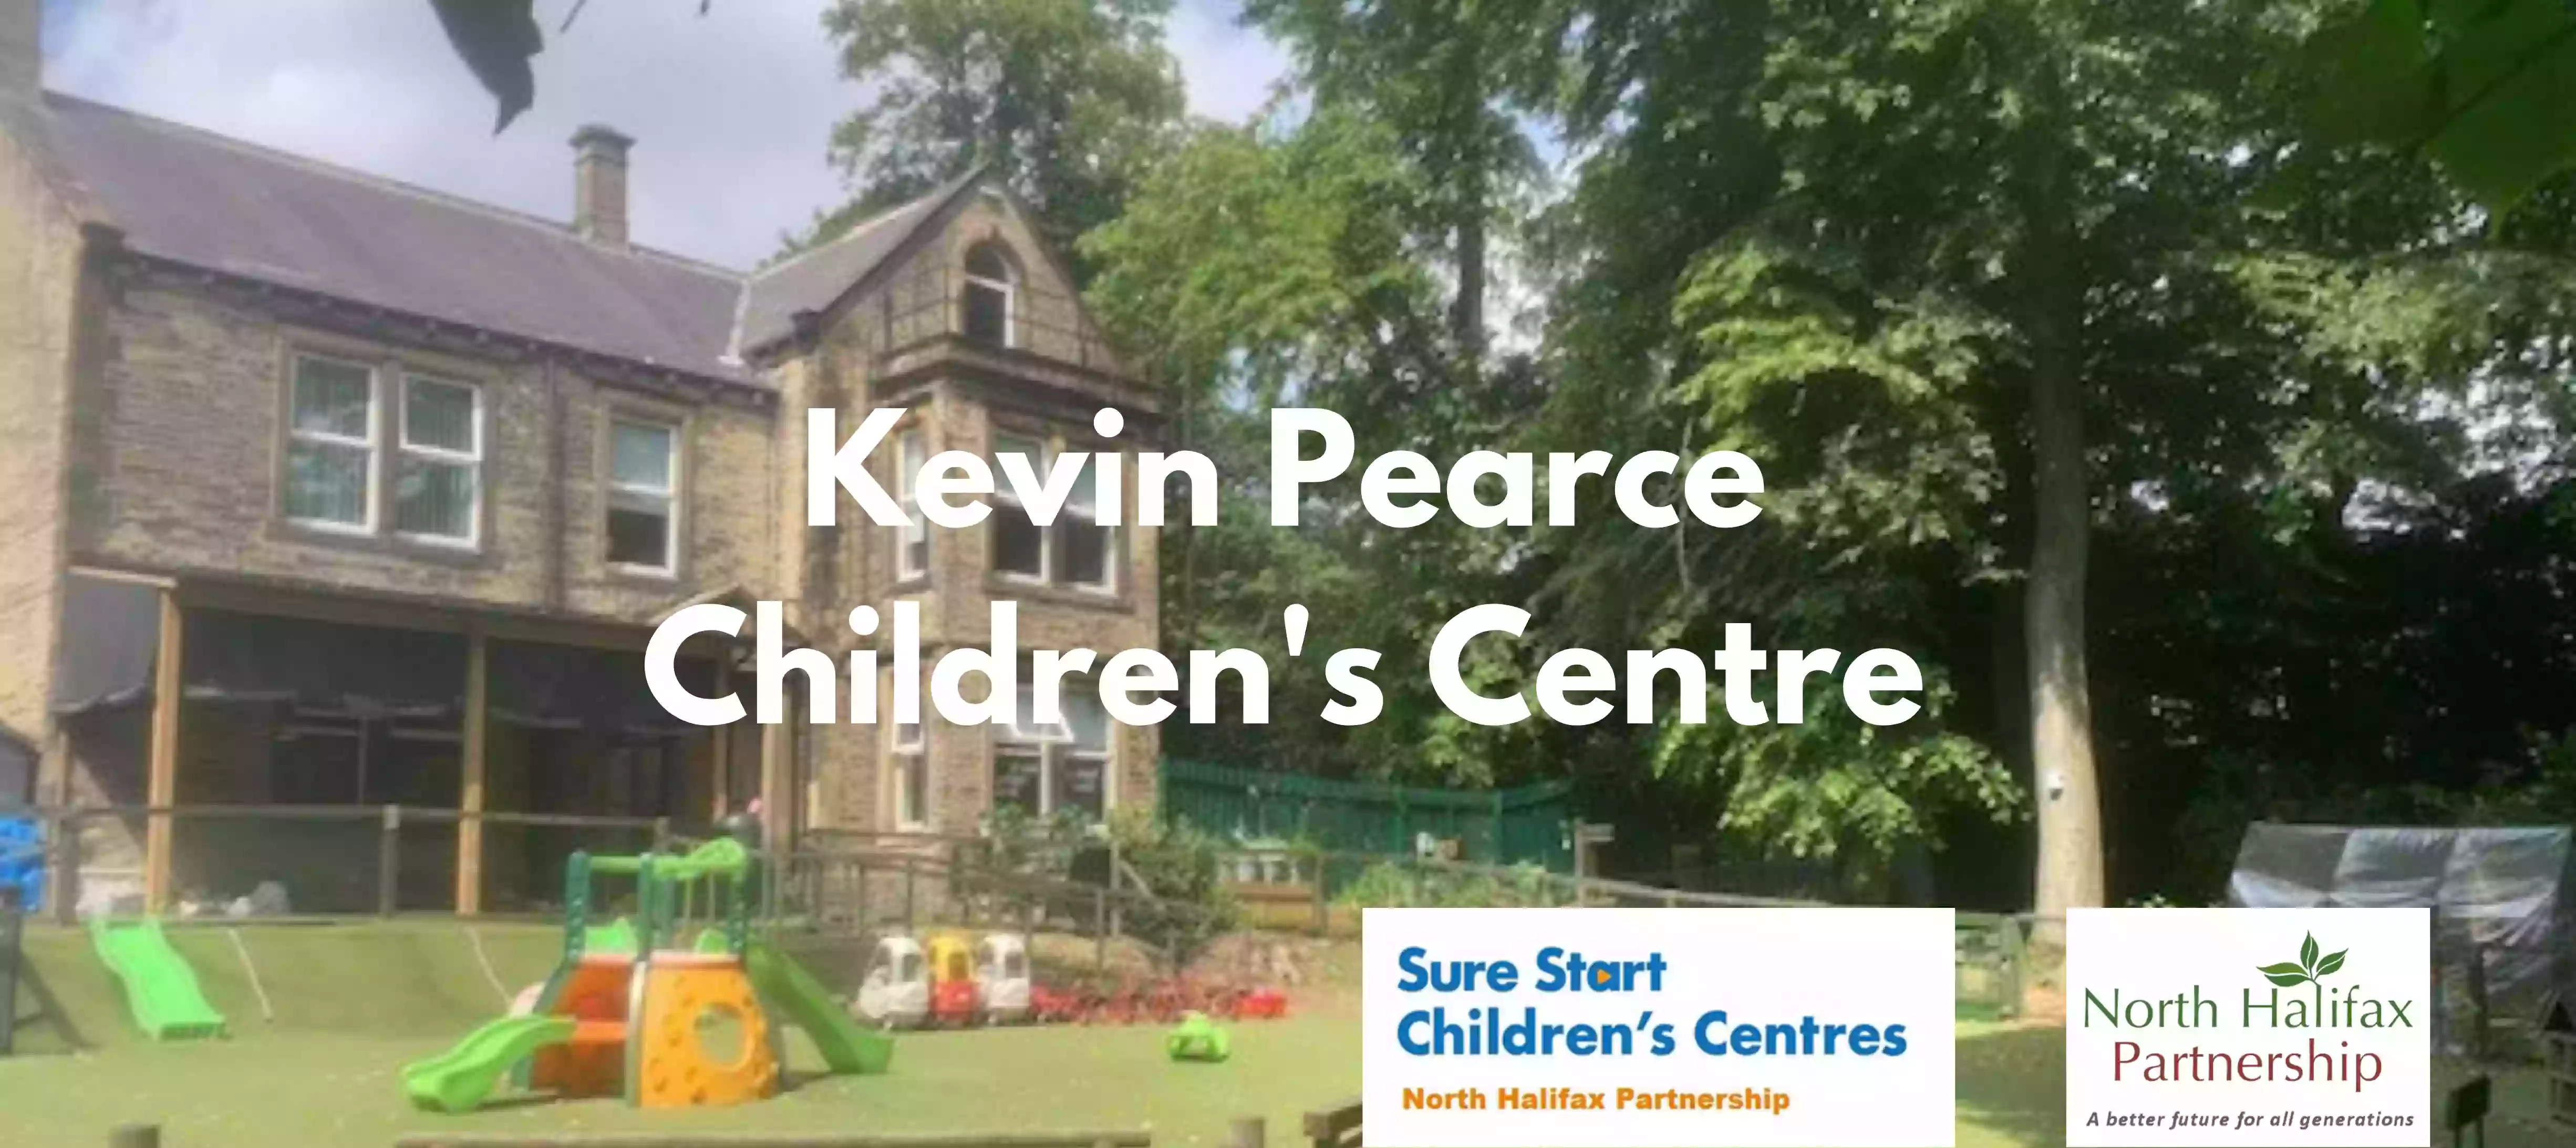 Kevin Pearce Children's Centre